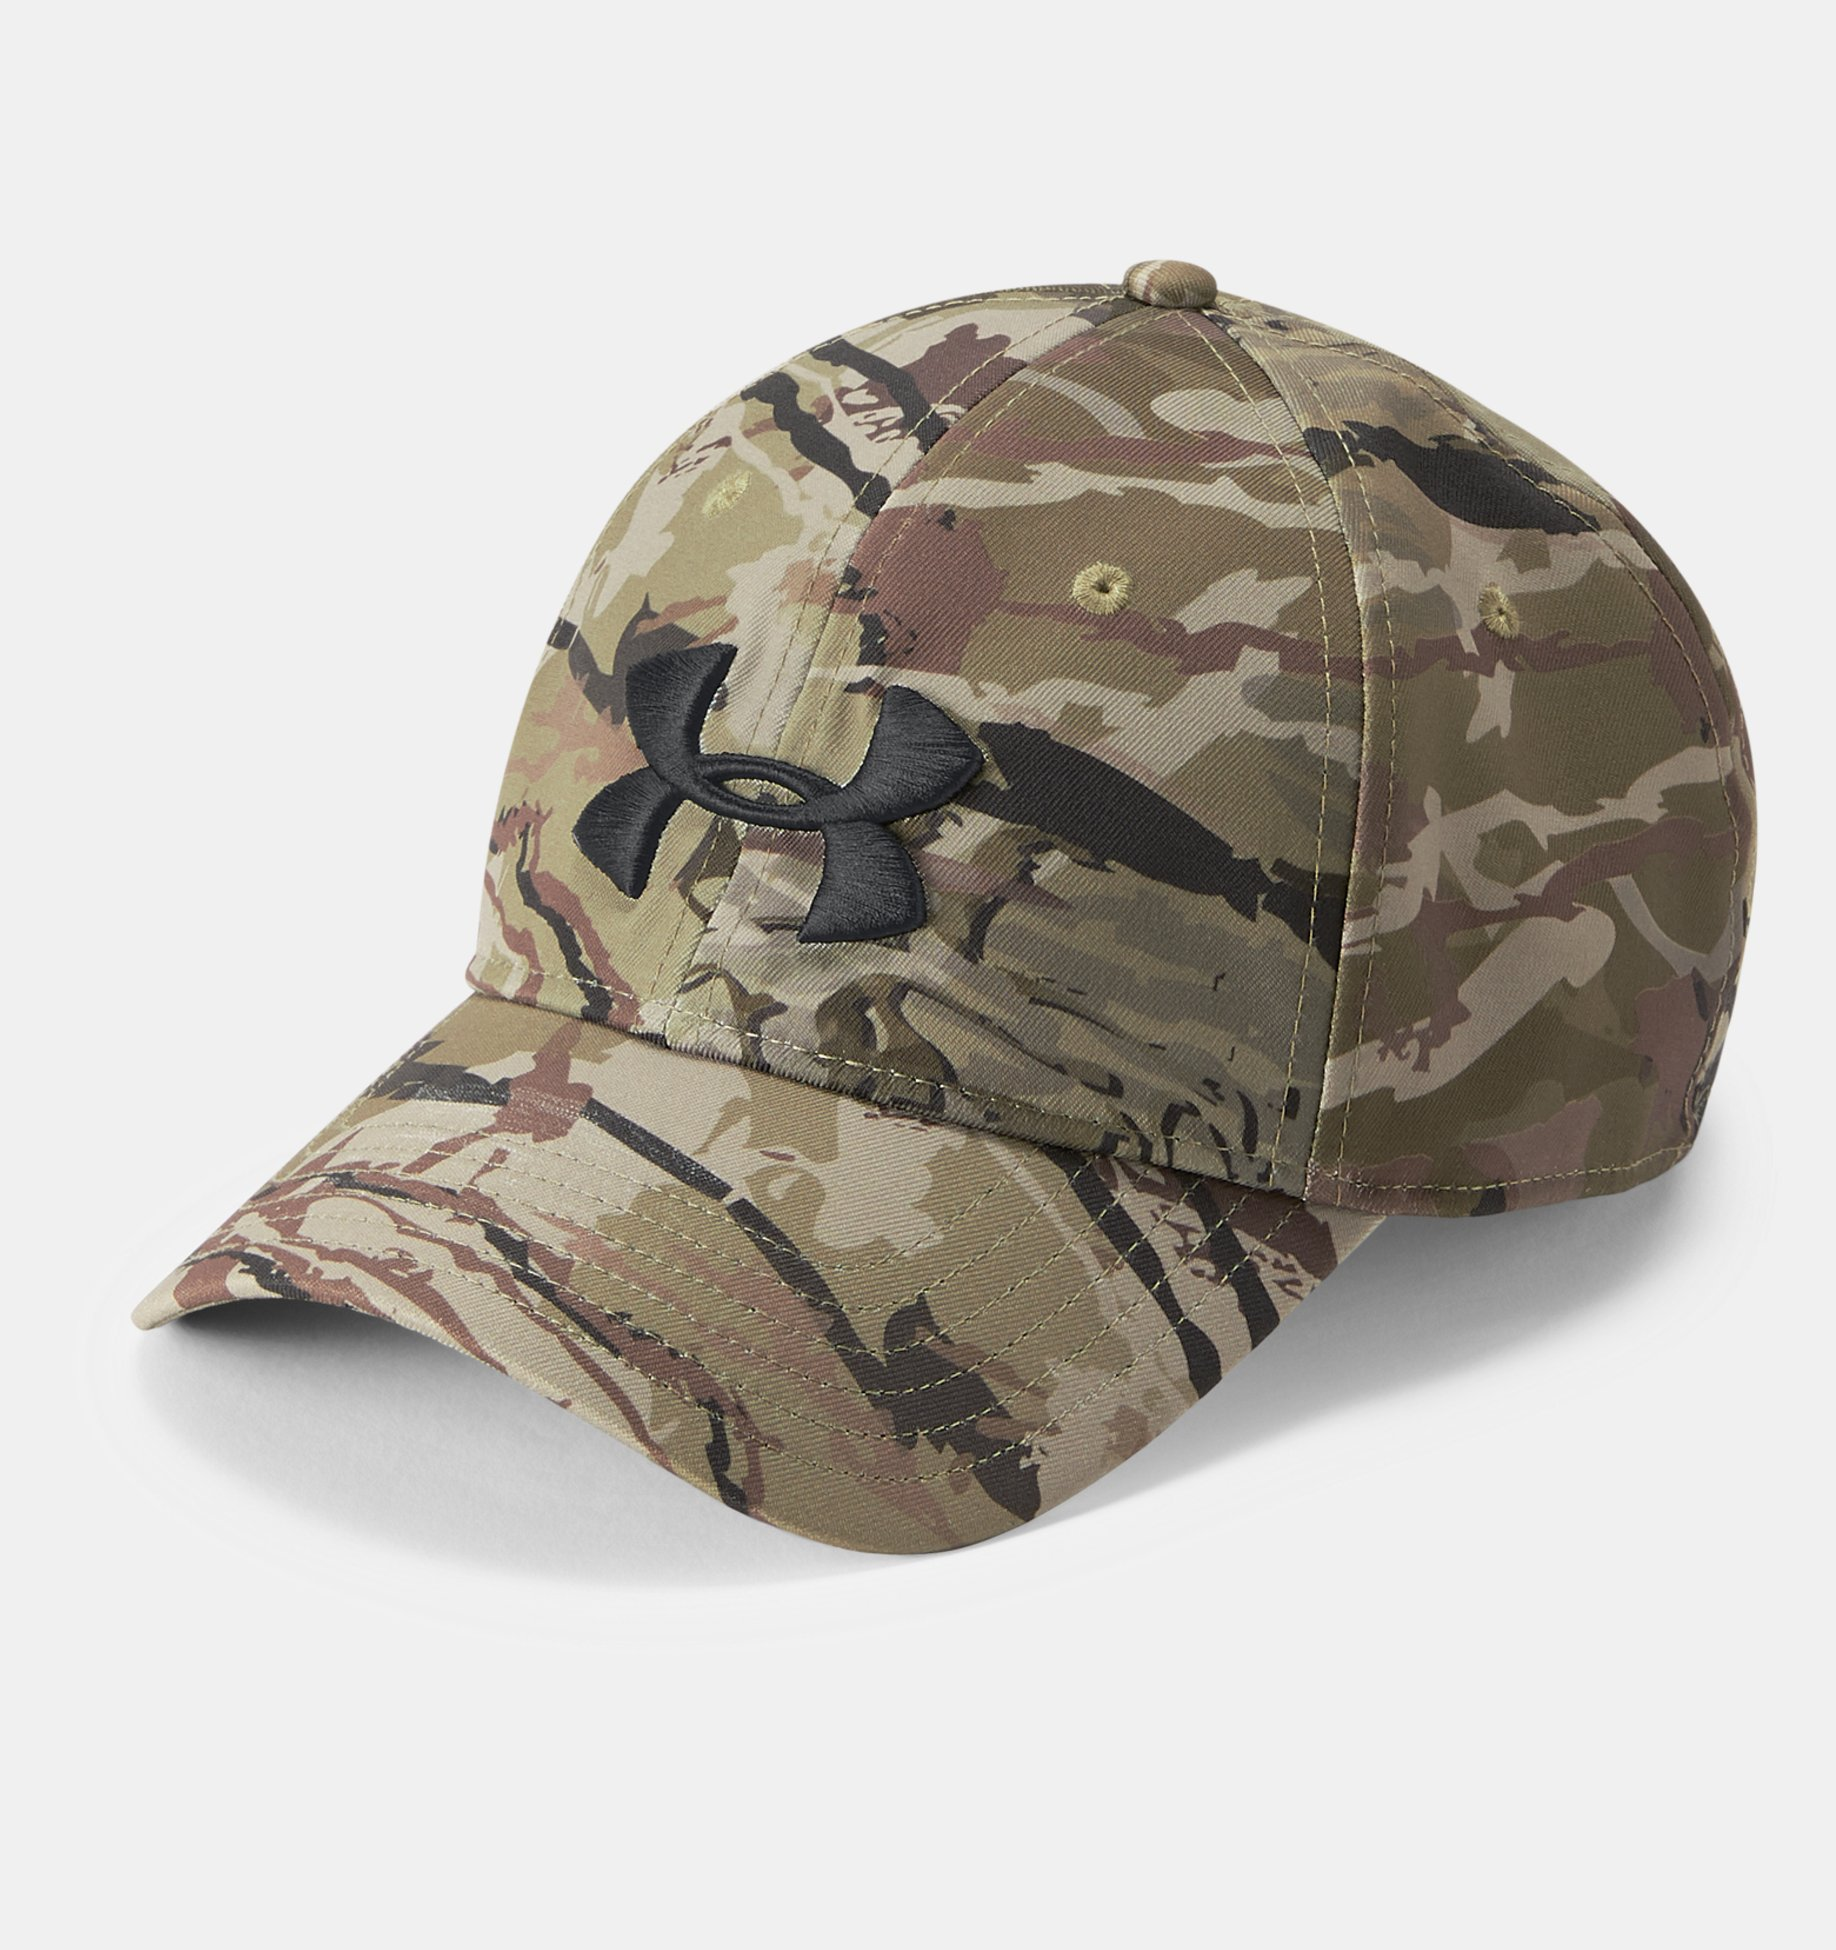 Under Armour Men's Camo 2.0 Hat/Cap - Misc/Assorted, OSFA